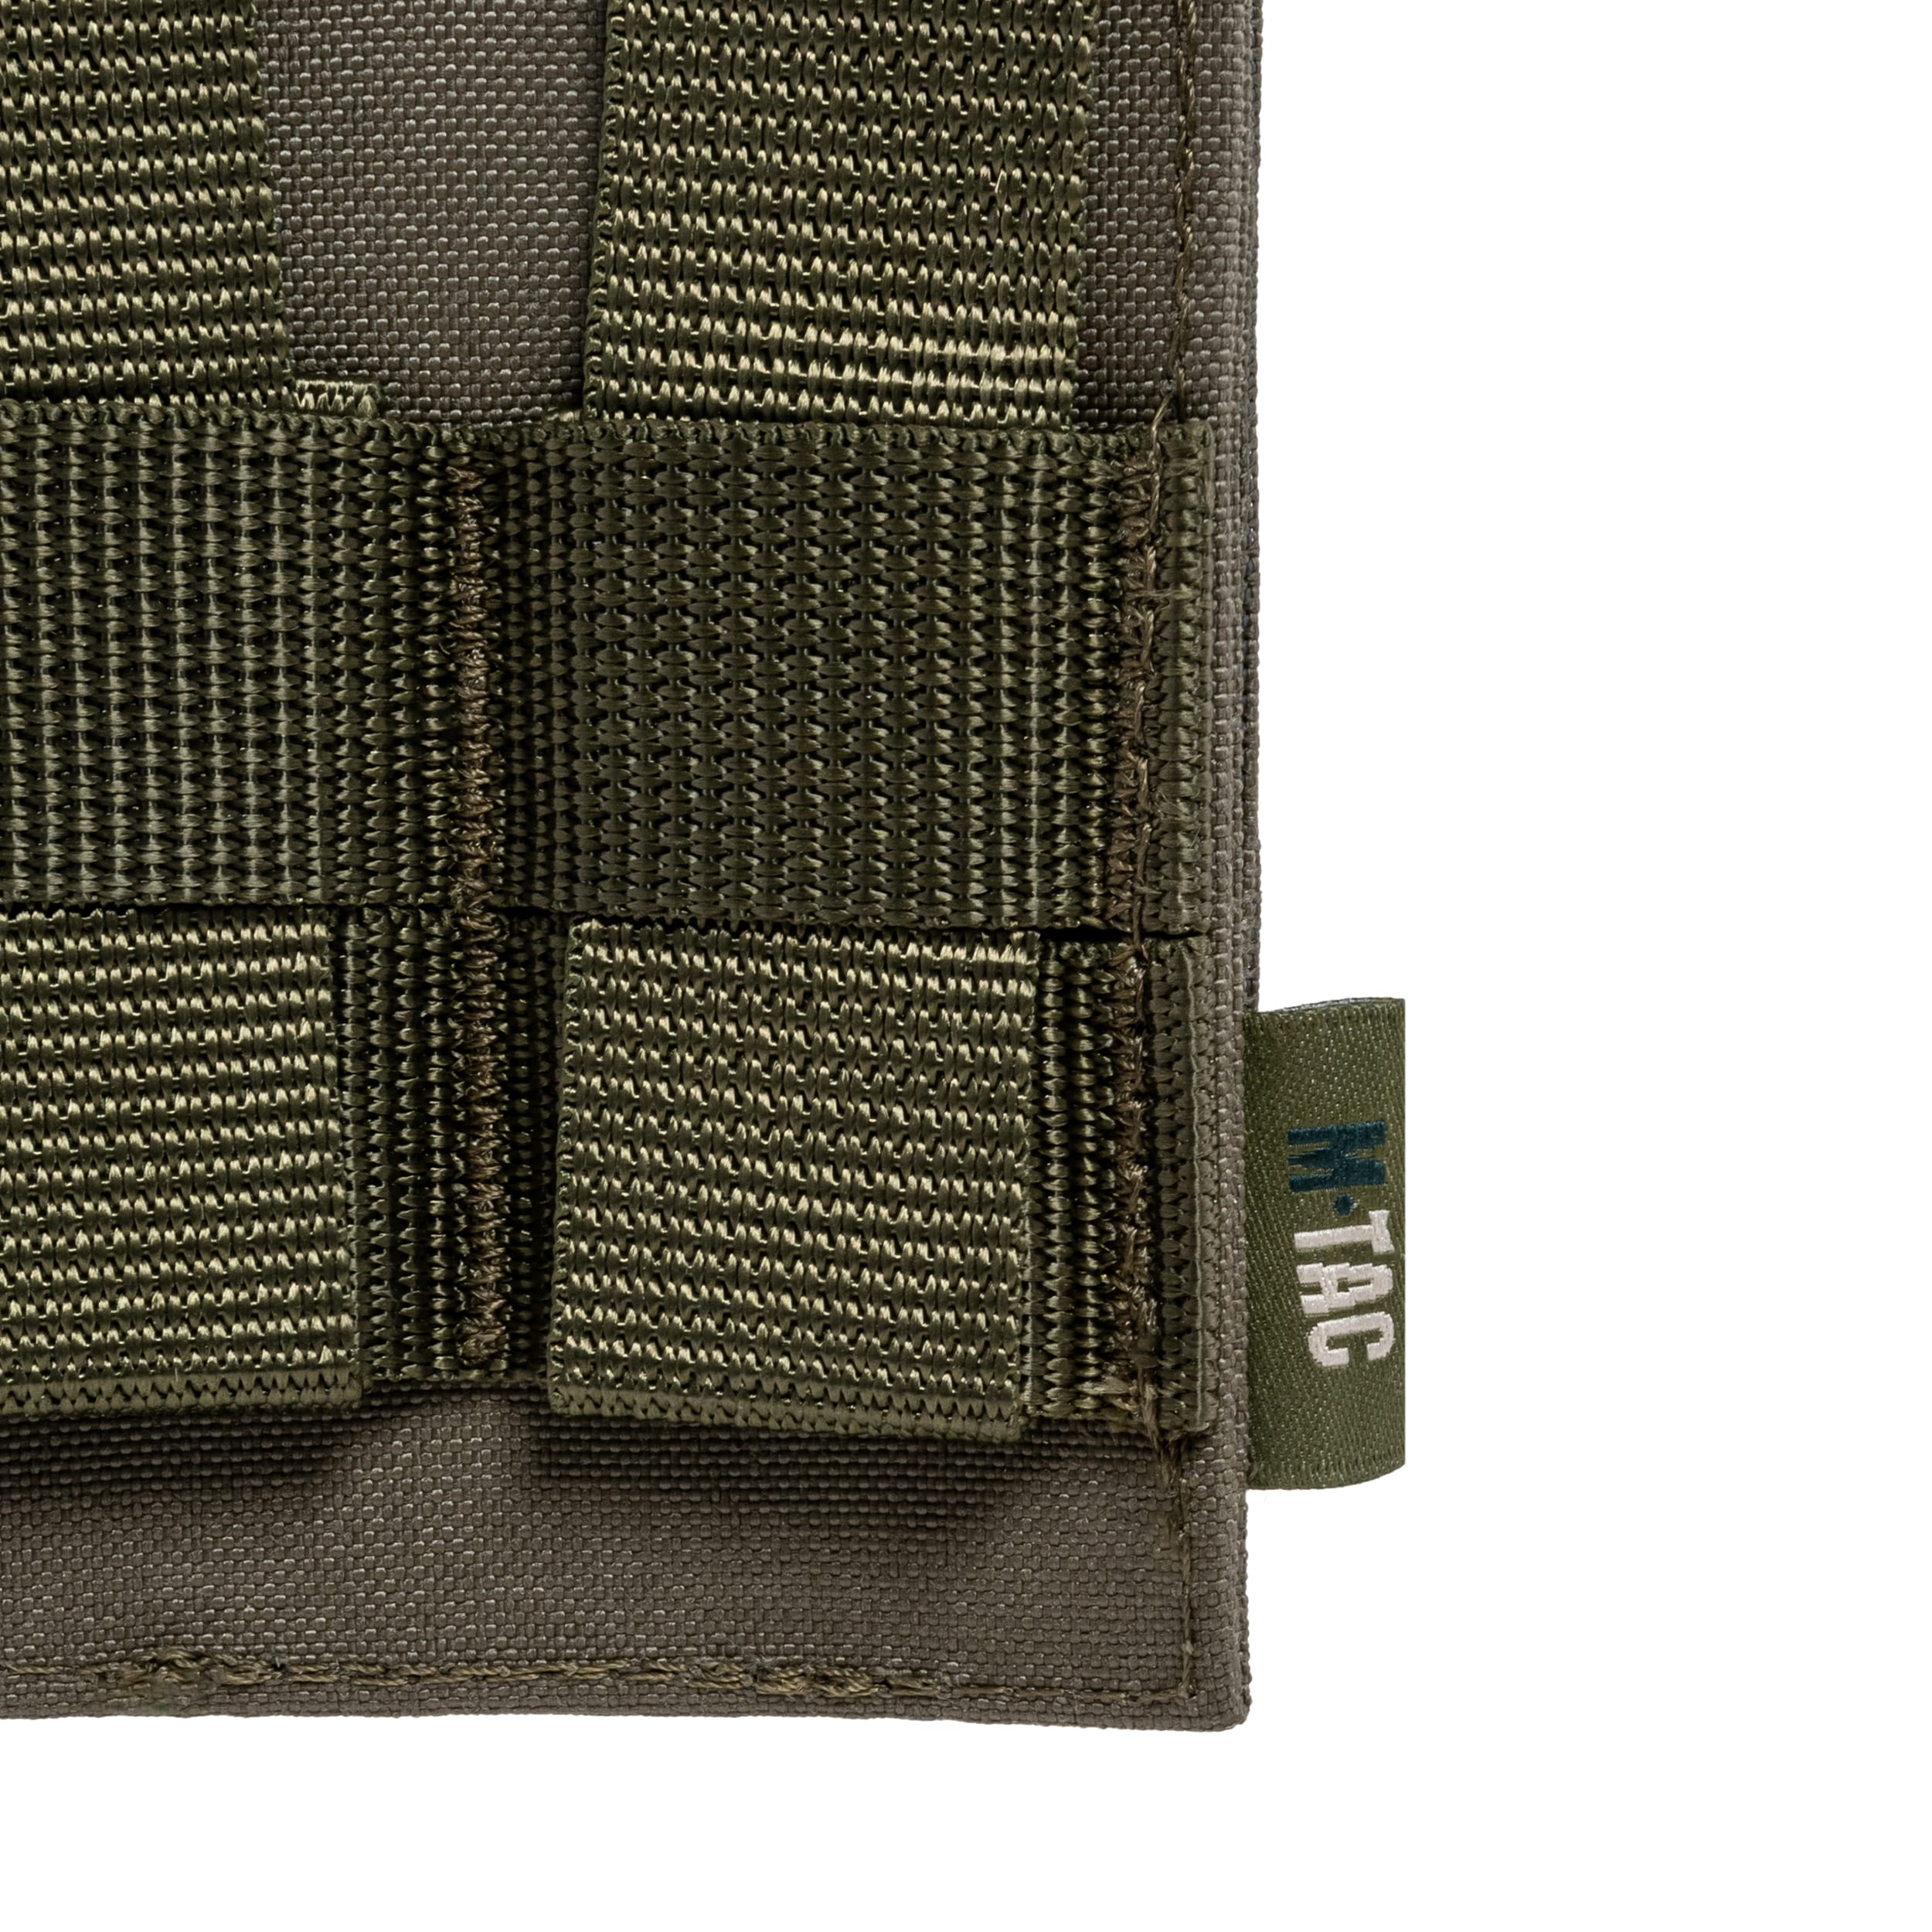 Ładownica elastyczna M-Tac Elite na magazynek karabinowy - Ranger Green